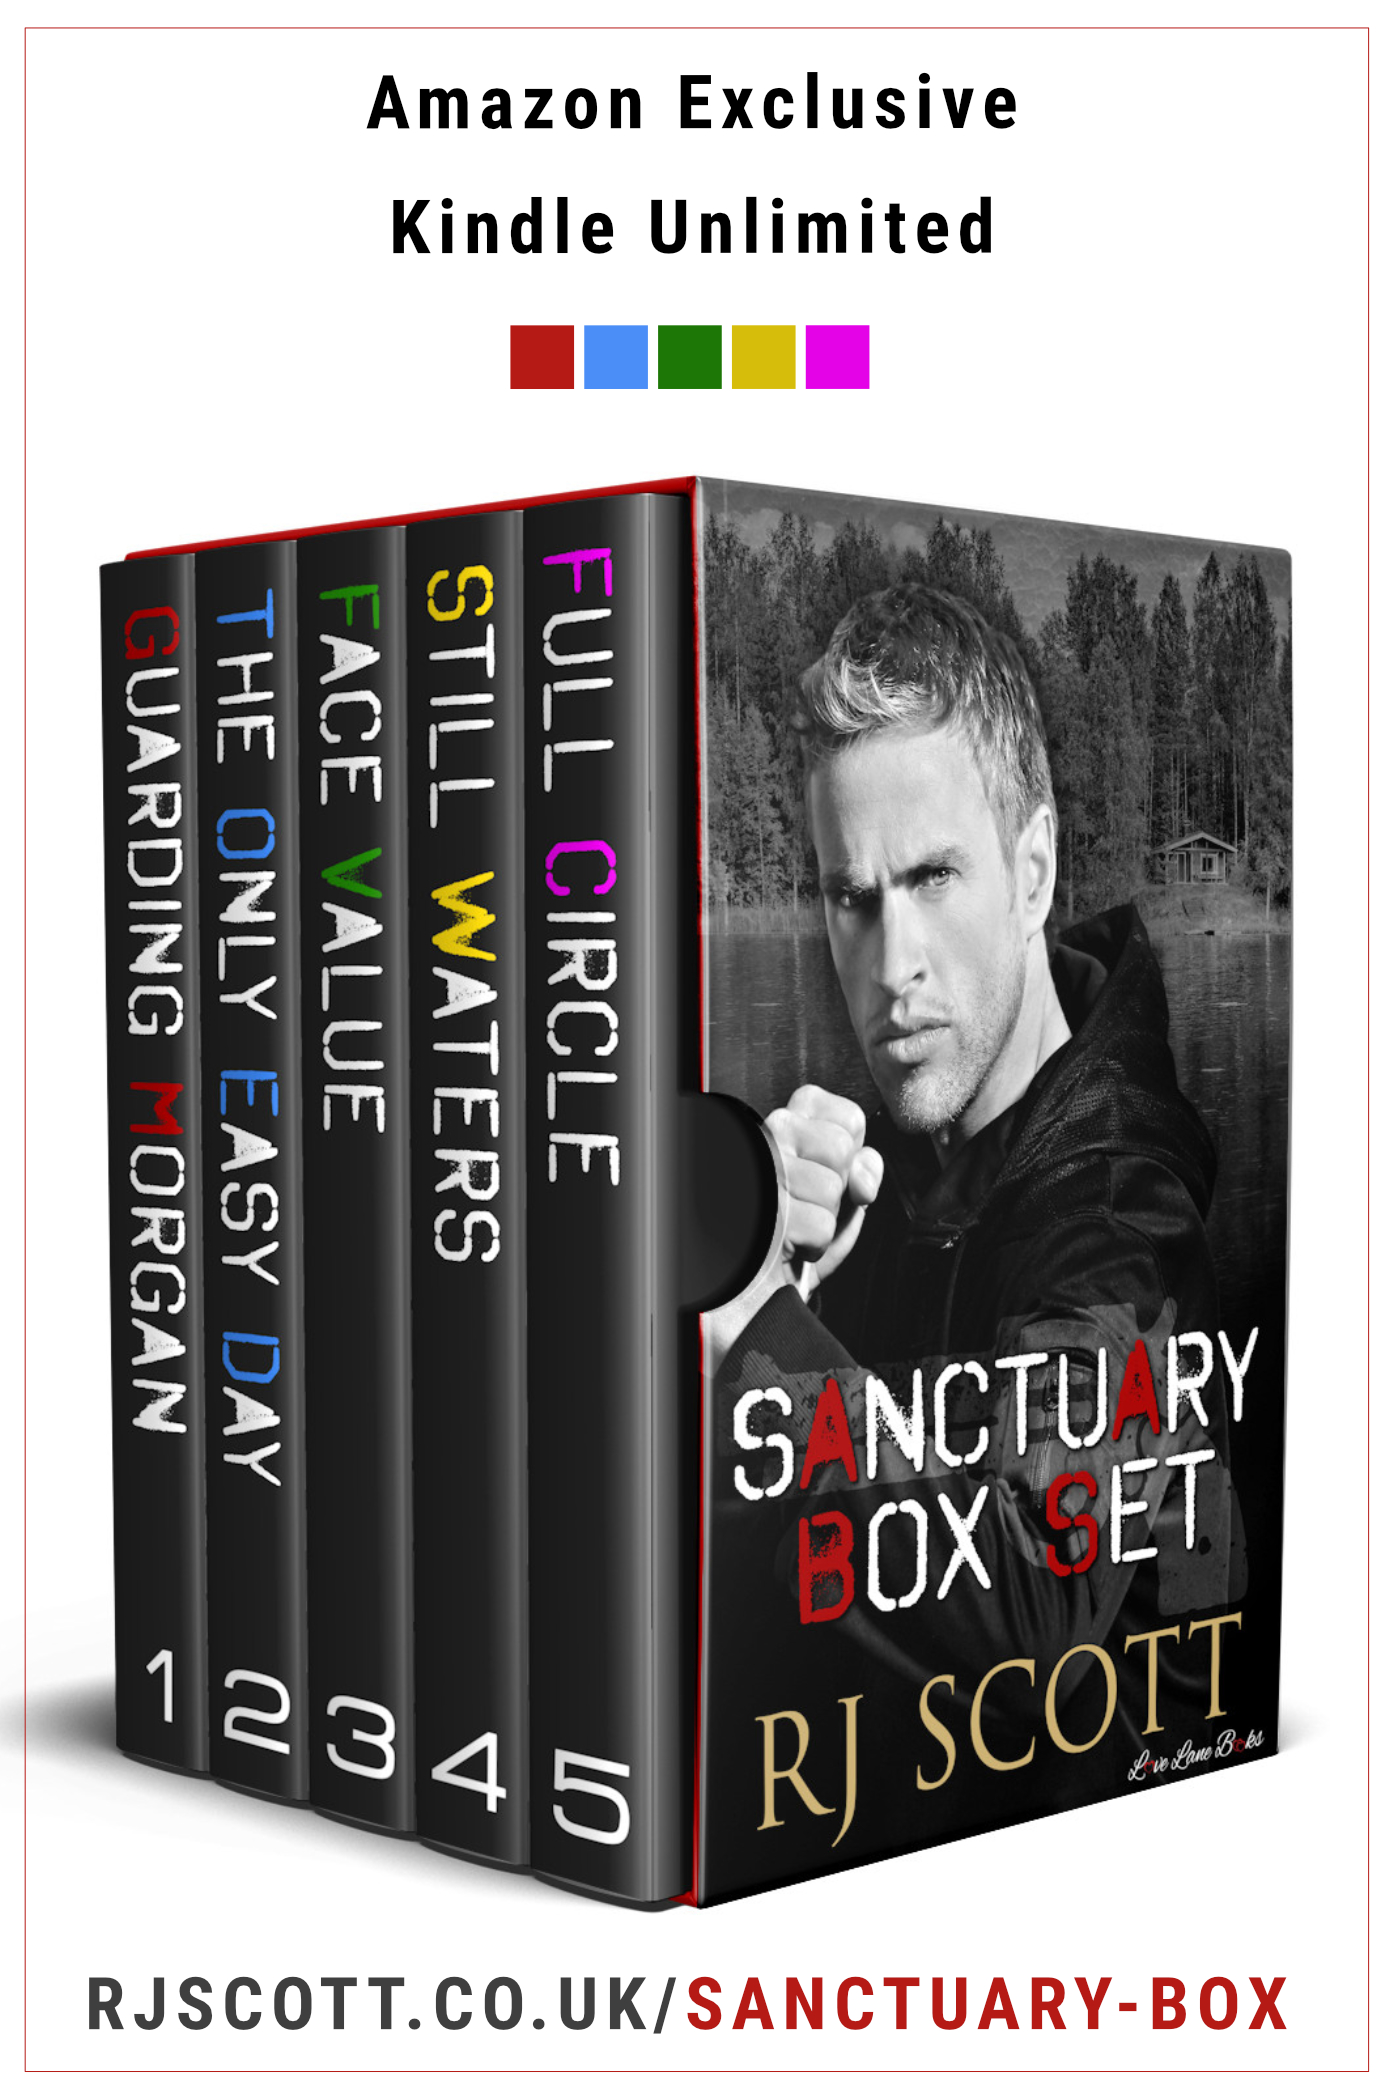 Sanctuary Box Set books 1 to 5 RJ Scott USA Today bestselling author of mm romance